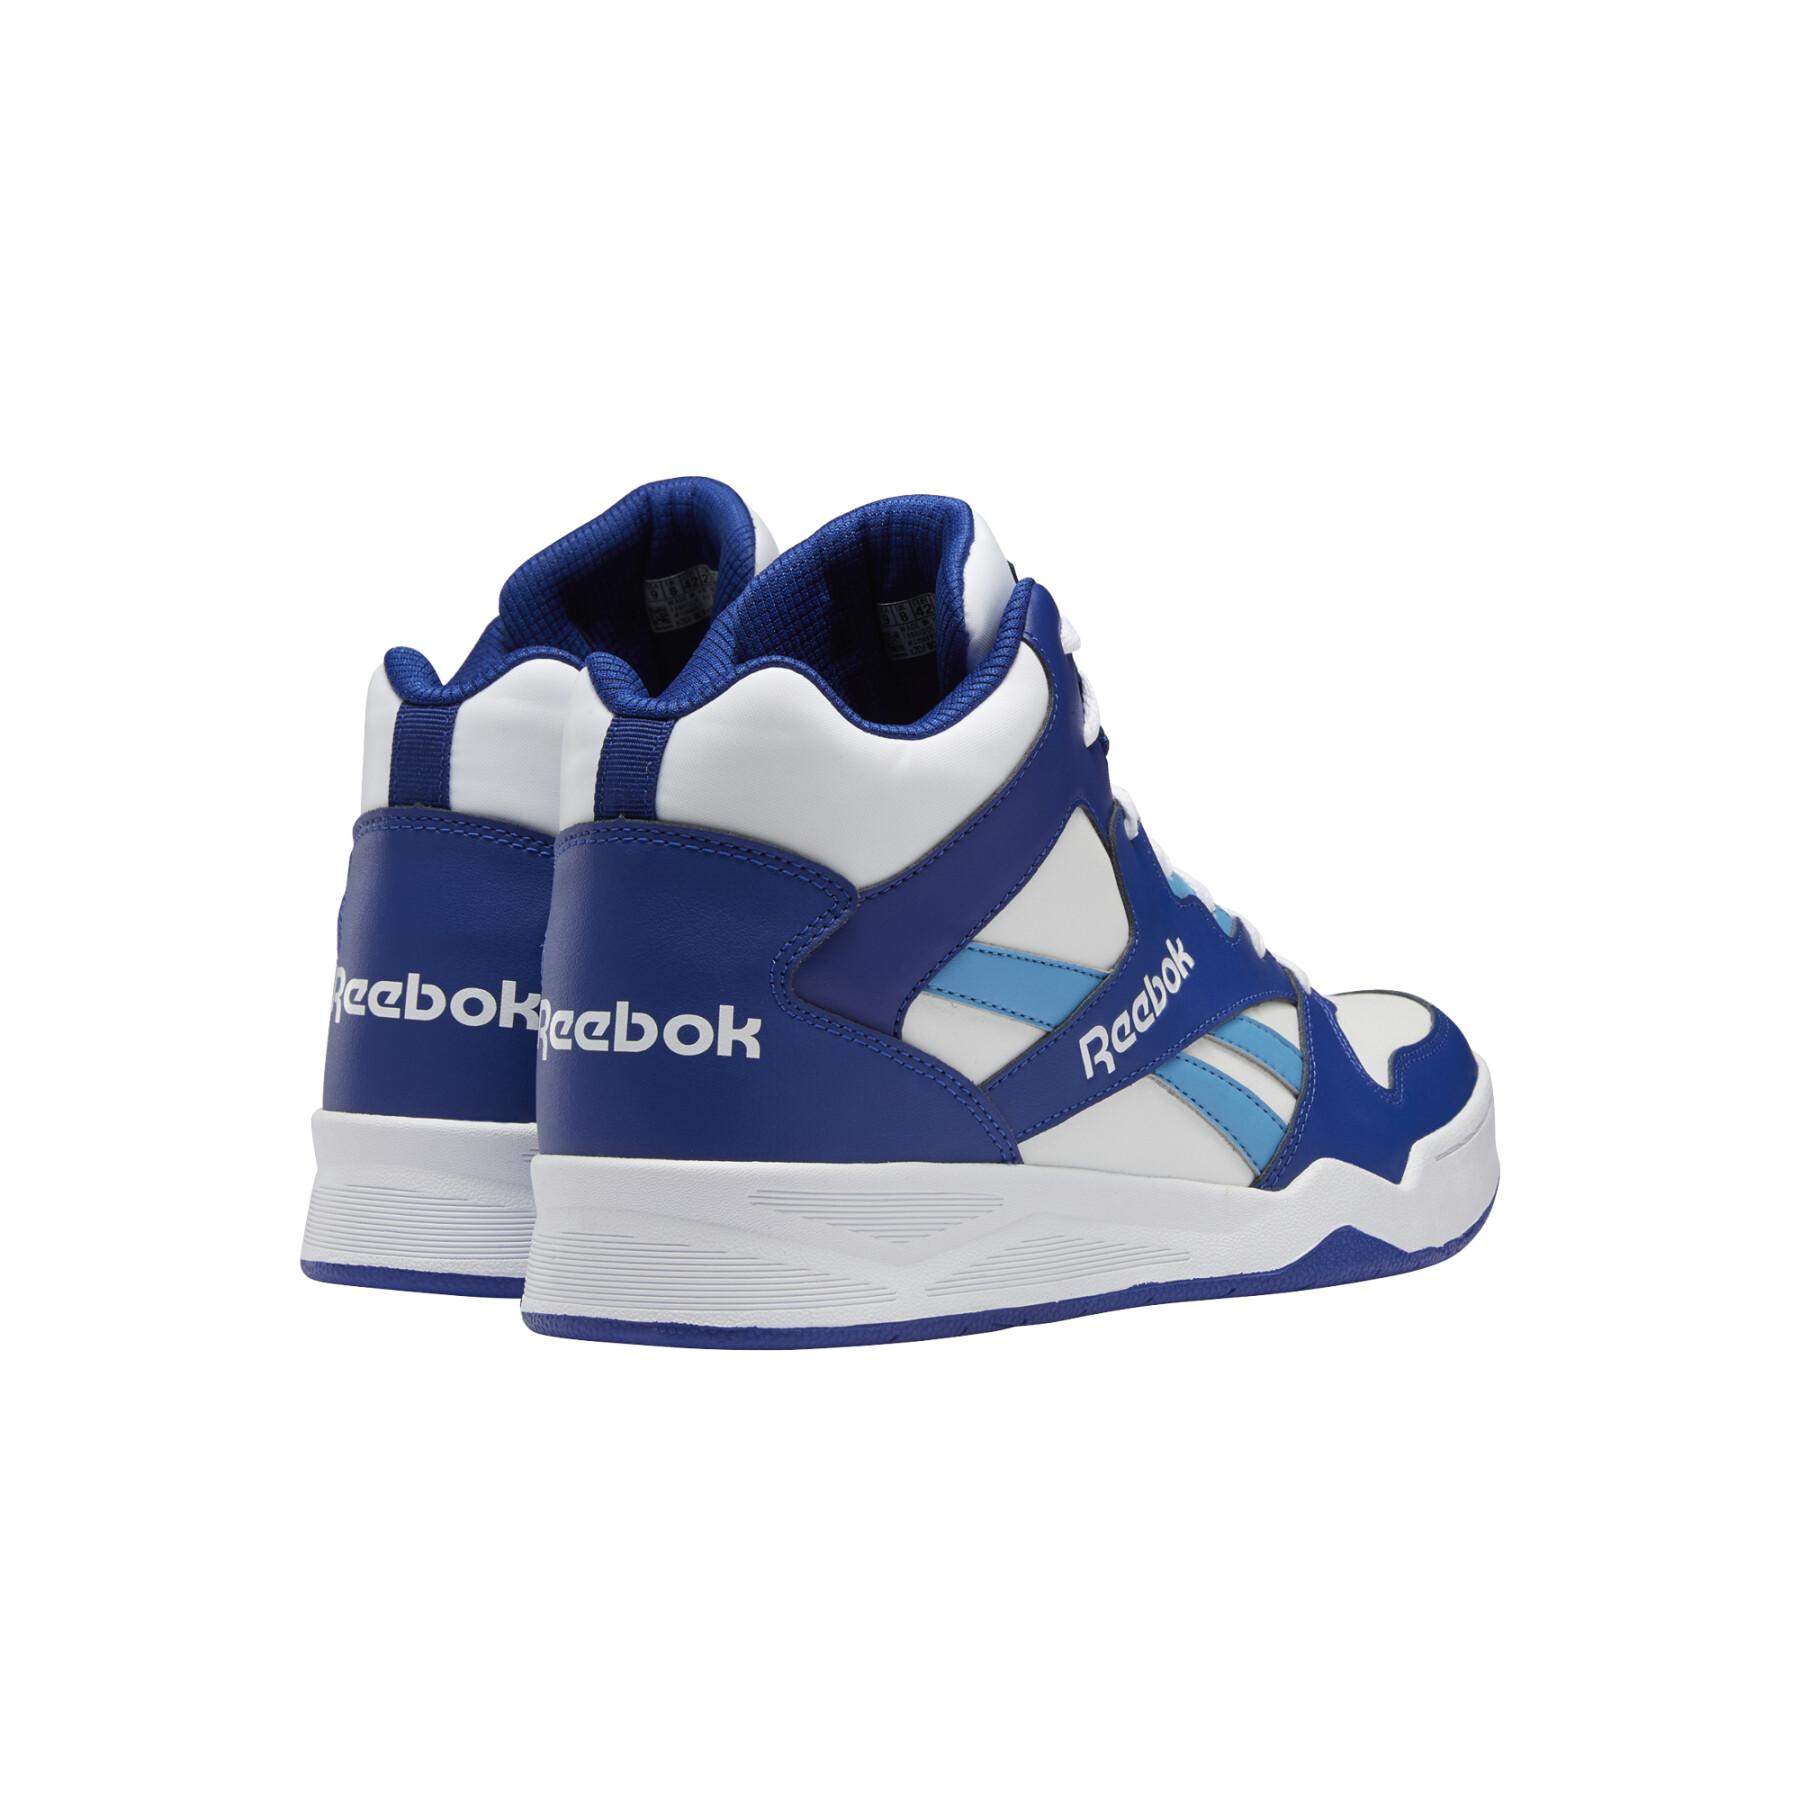 Schuhe Reebok Royal BB4500 HI2